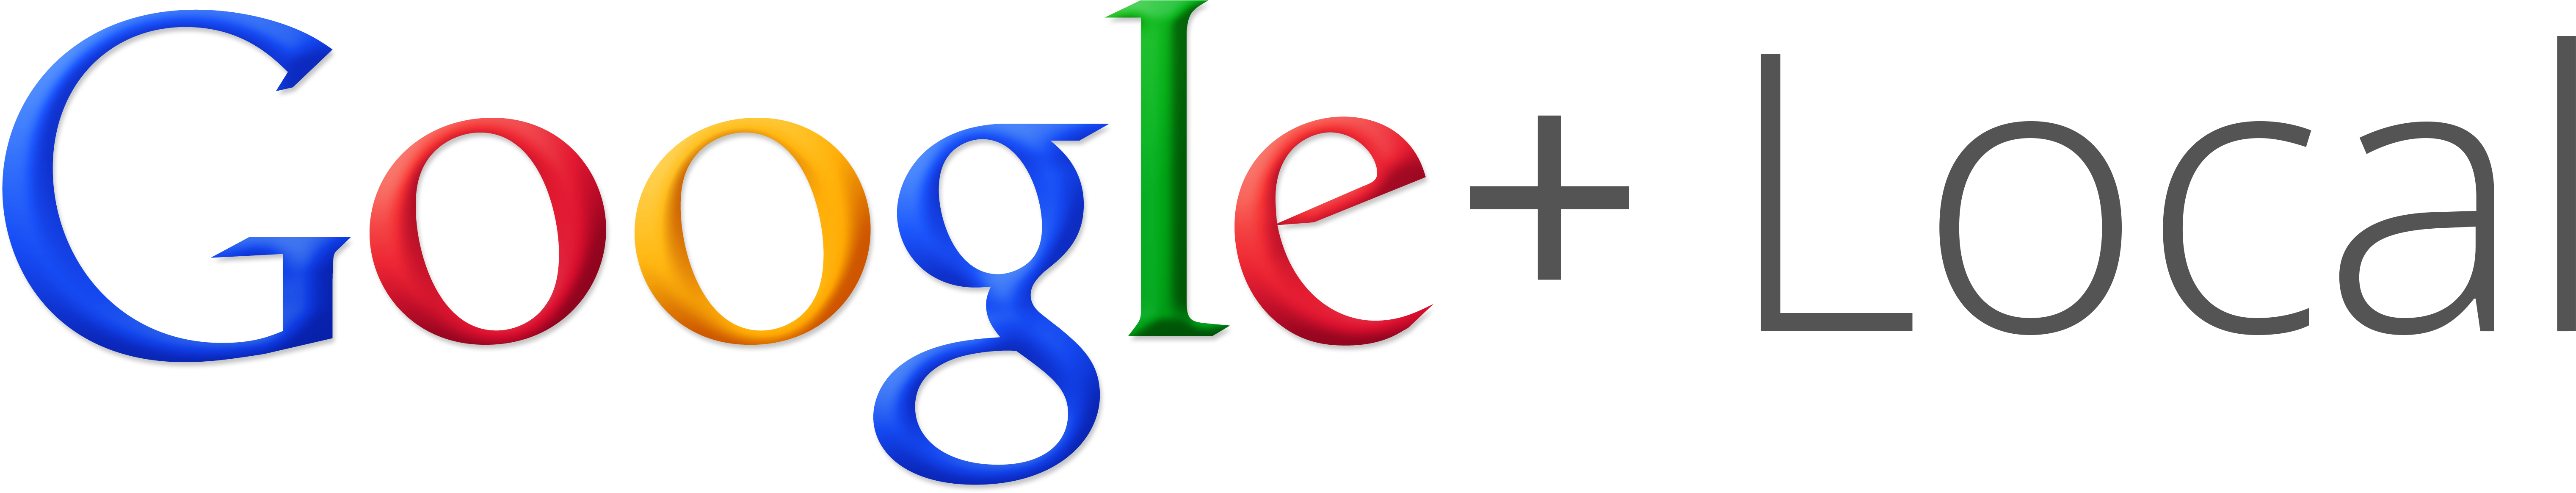 Google Plus Local Logo PNG image